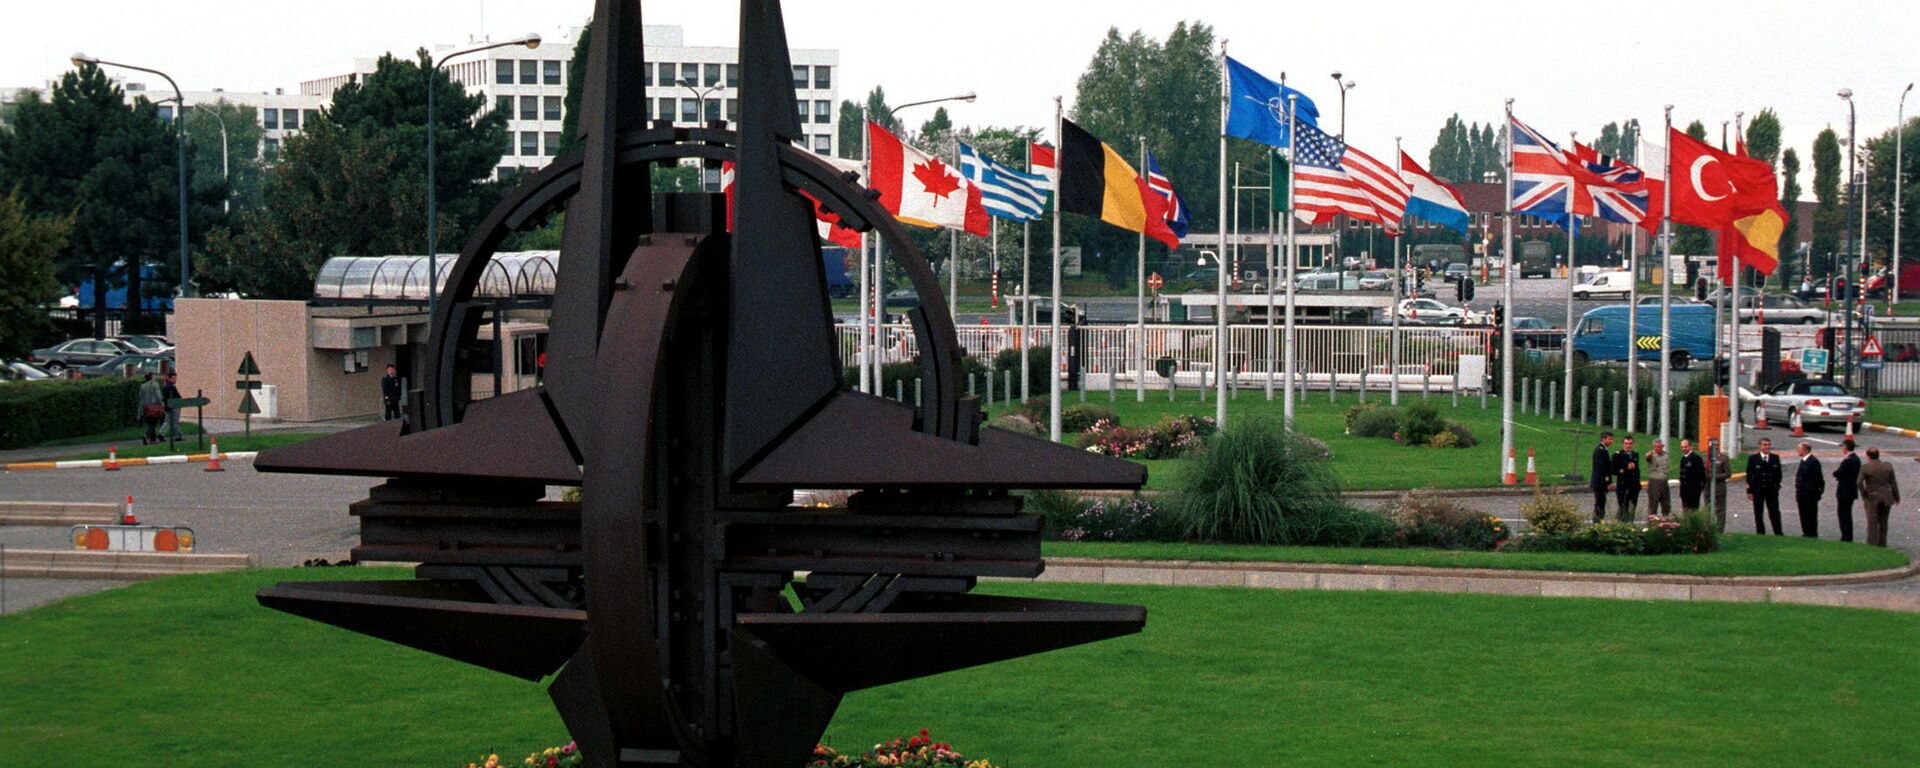 Trụ sở NATO tại Brussels - Sputnik Việt Nam, 1920, 07.06.2021